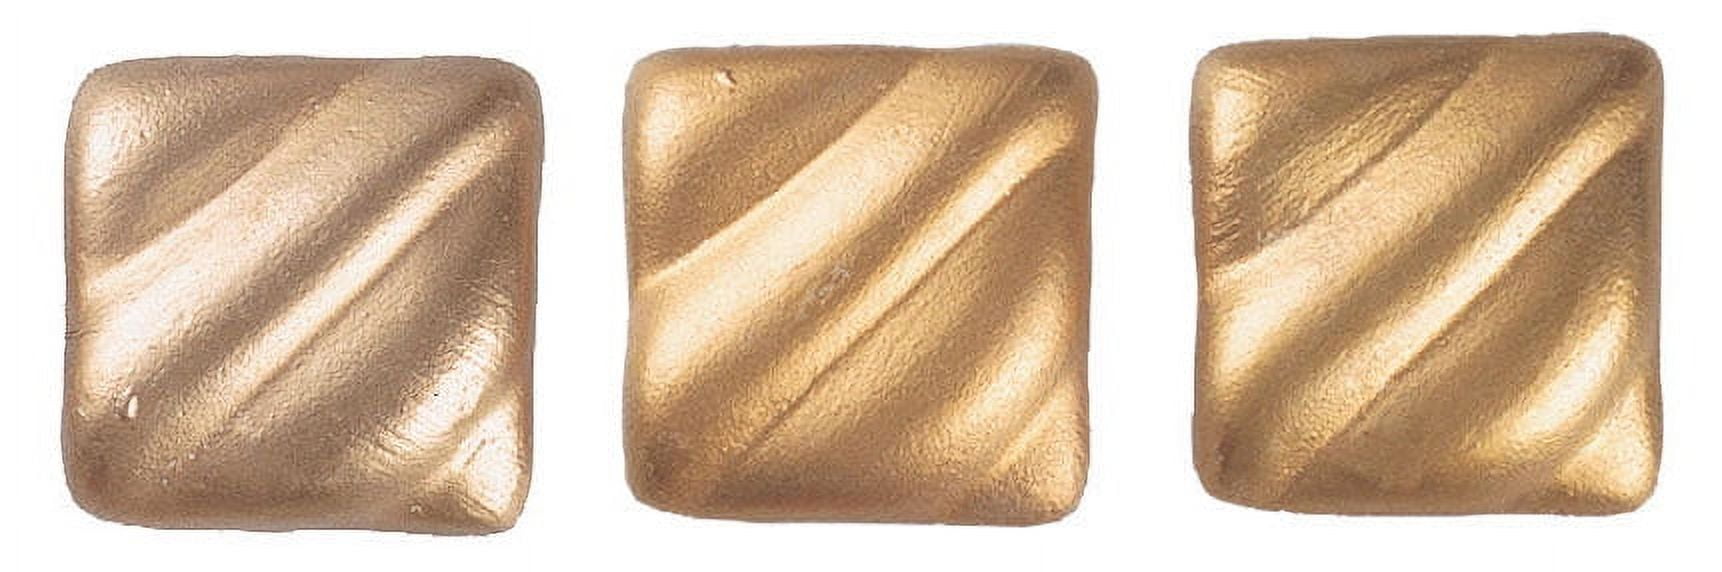 AMACO Rub n Buff Wax Metallic Finish 9 Color Kit - Antique Gold European  Gold